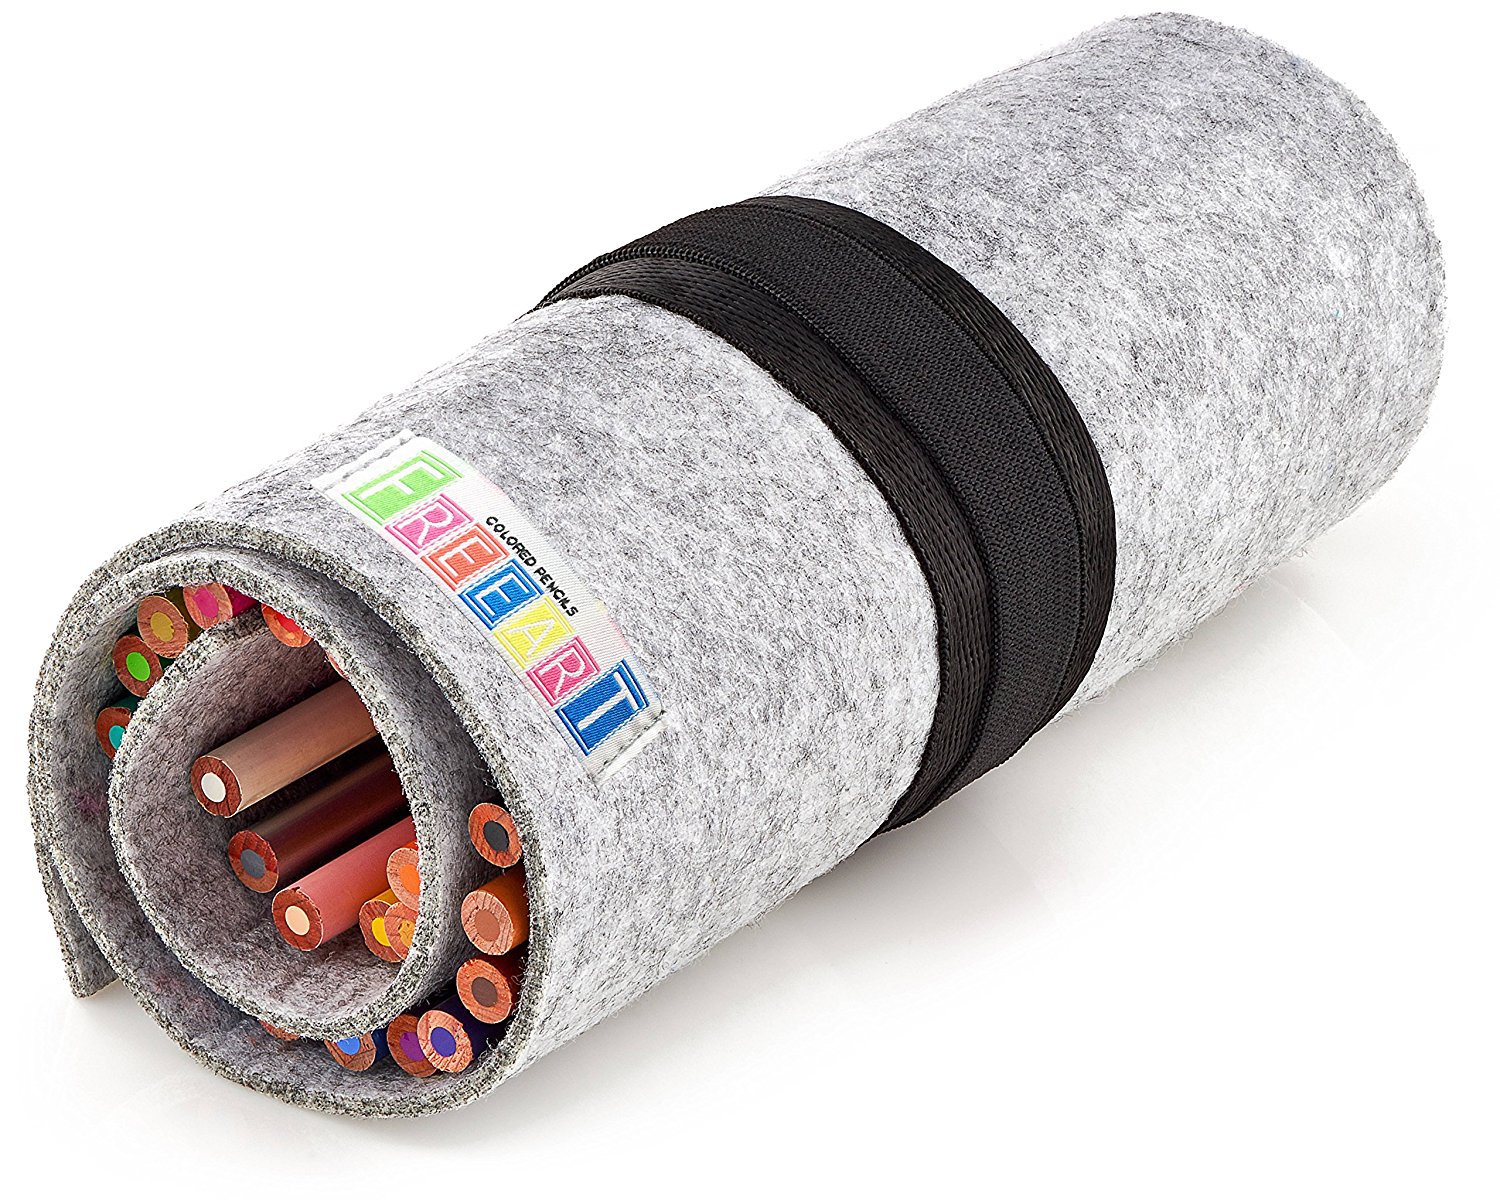 LIGHTNING DEAL ALERT! Colored Pencils Set With Wool Felt Wrap – 70% off!